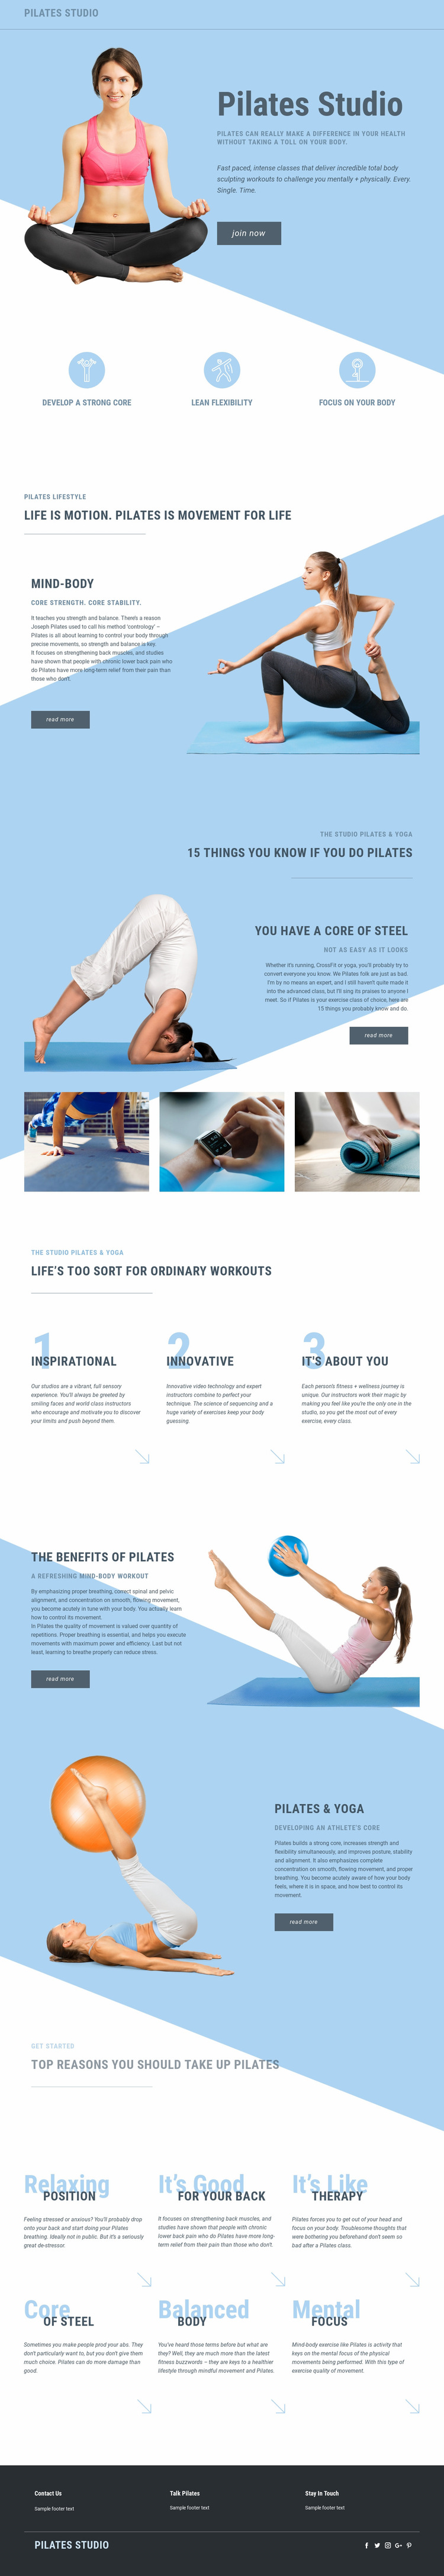 Pilates studio and sports Web Page Design